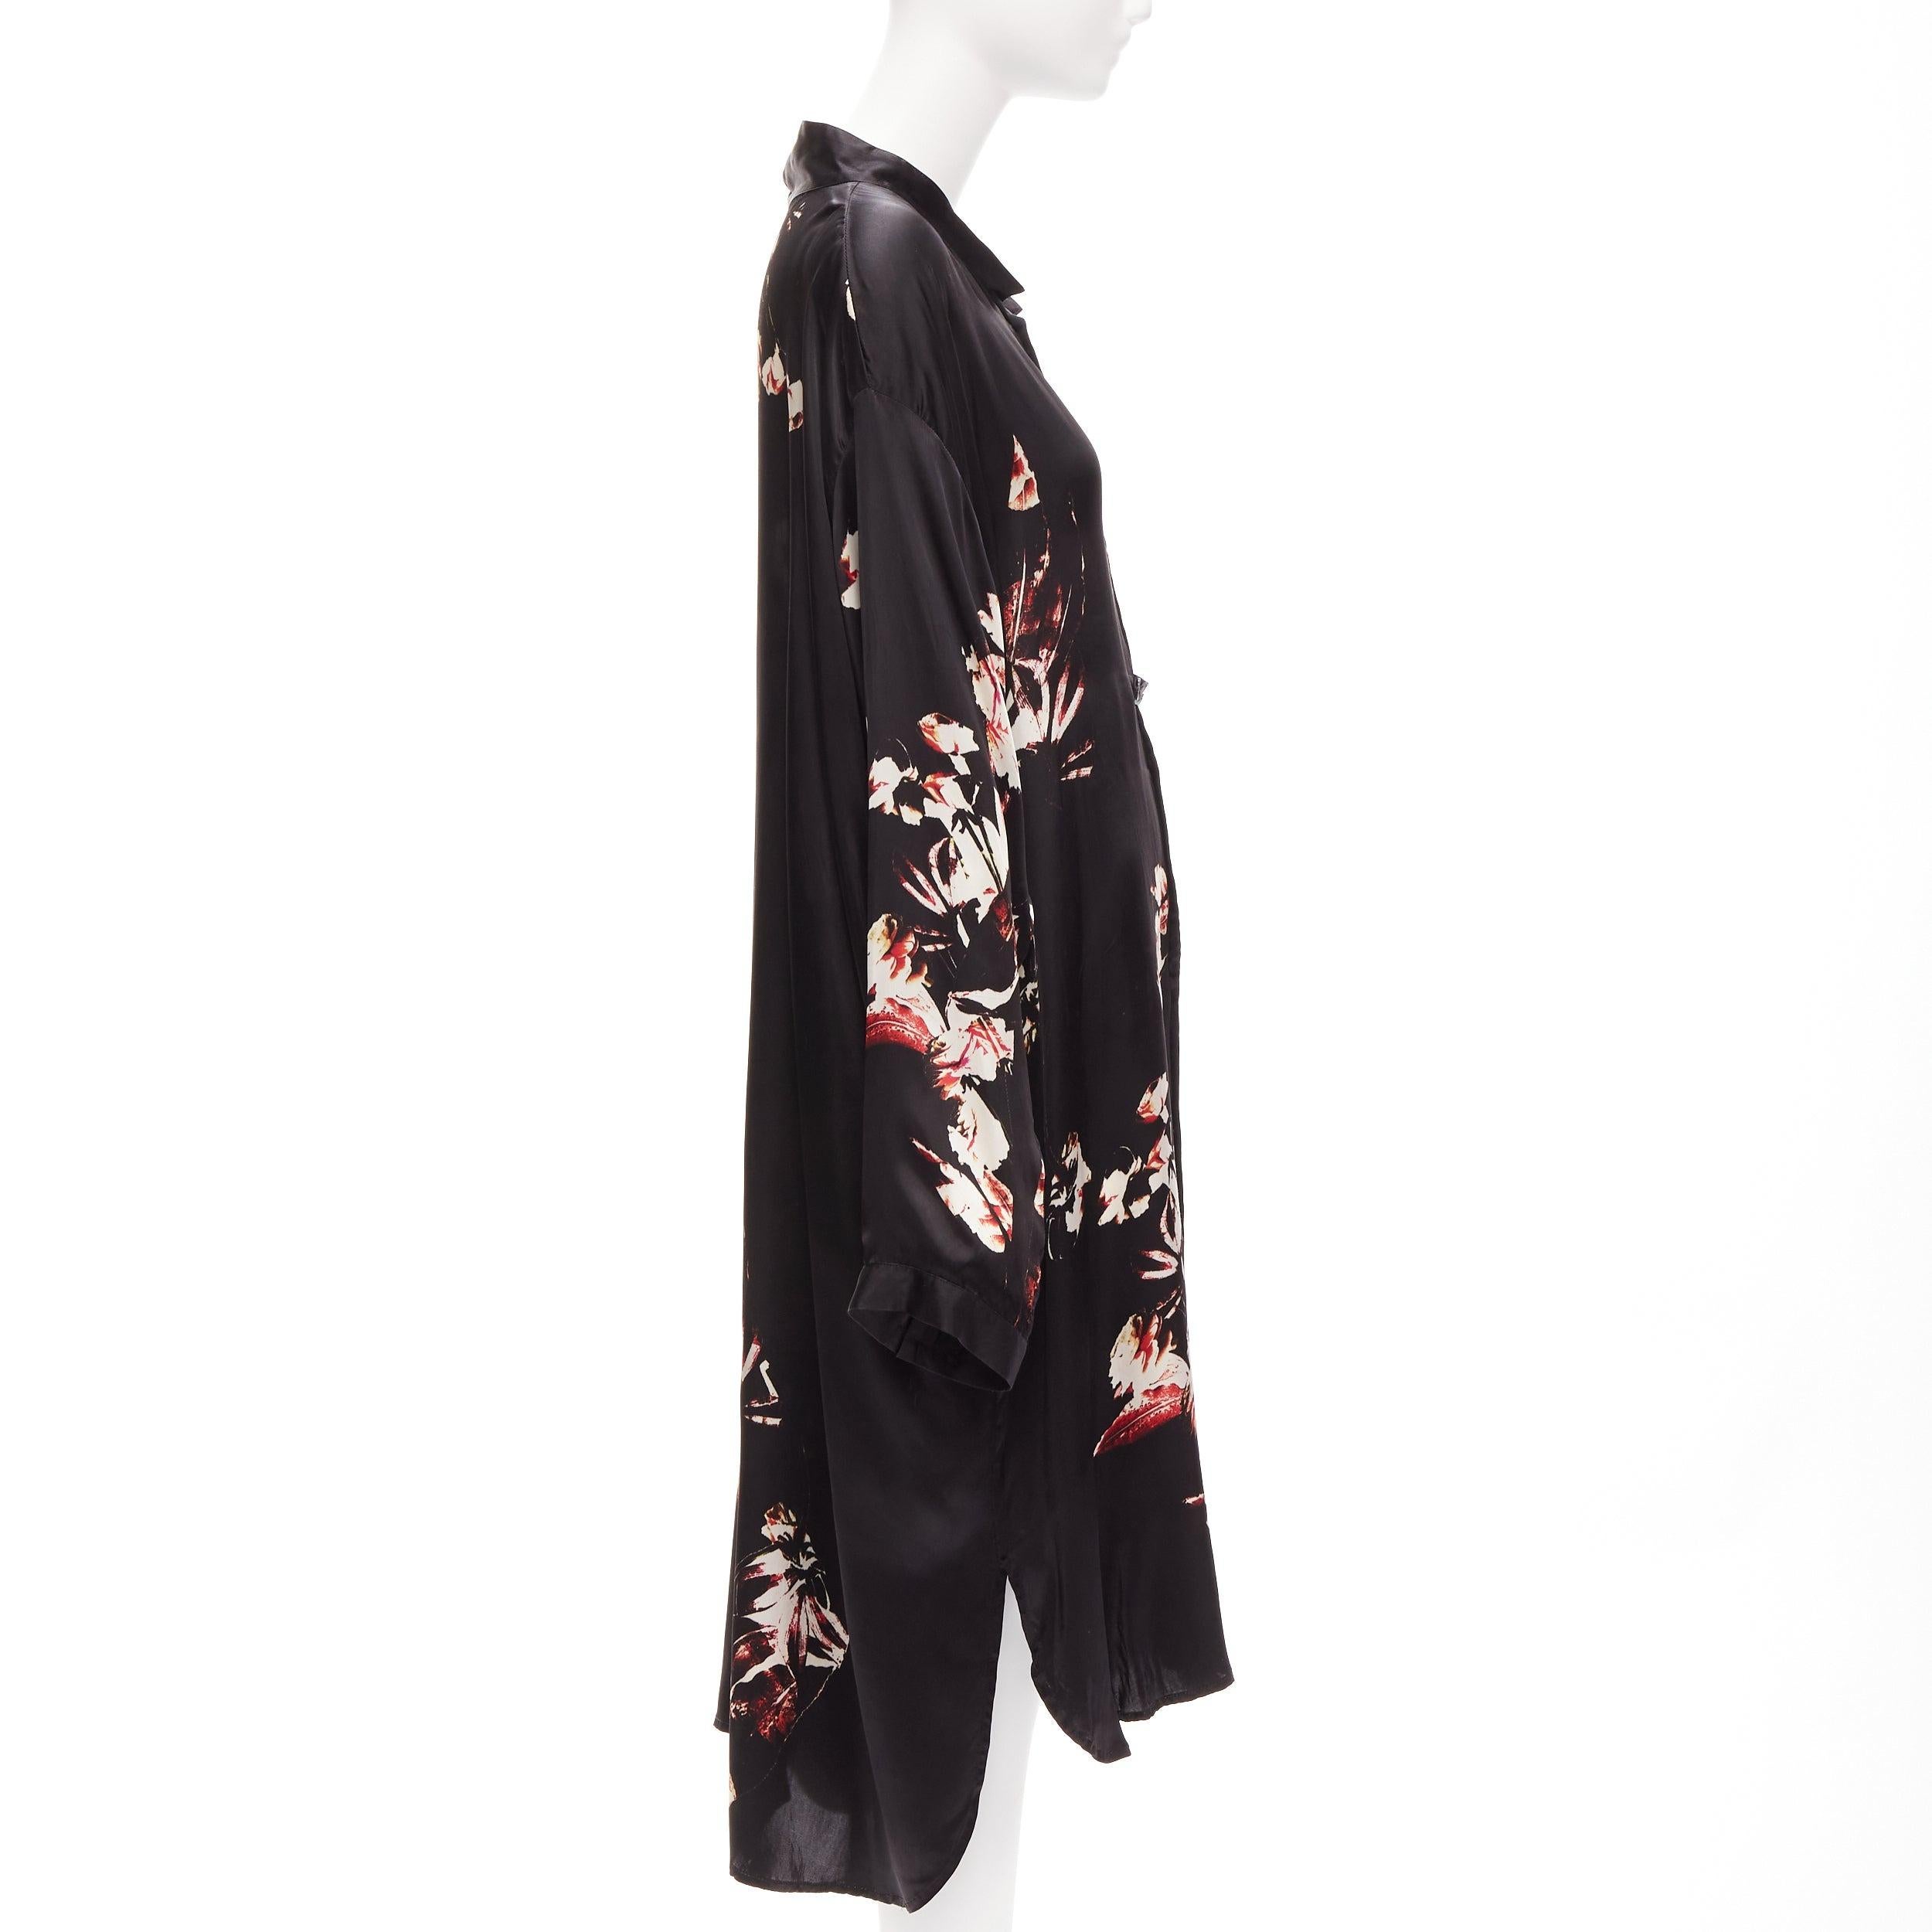 Black Y'S YOHJI YAMAMOTO black silky floral print chinese buttons robe dress JP2 M